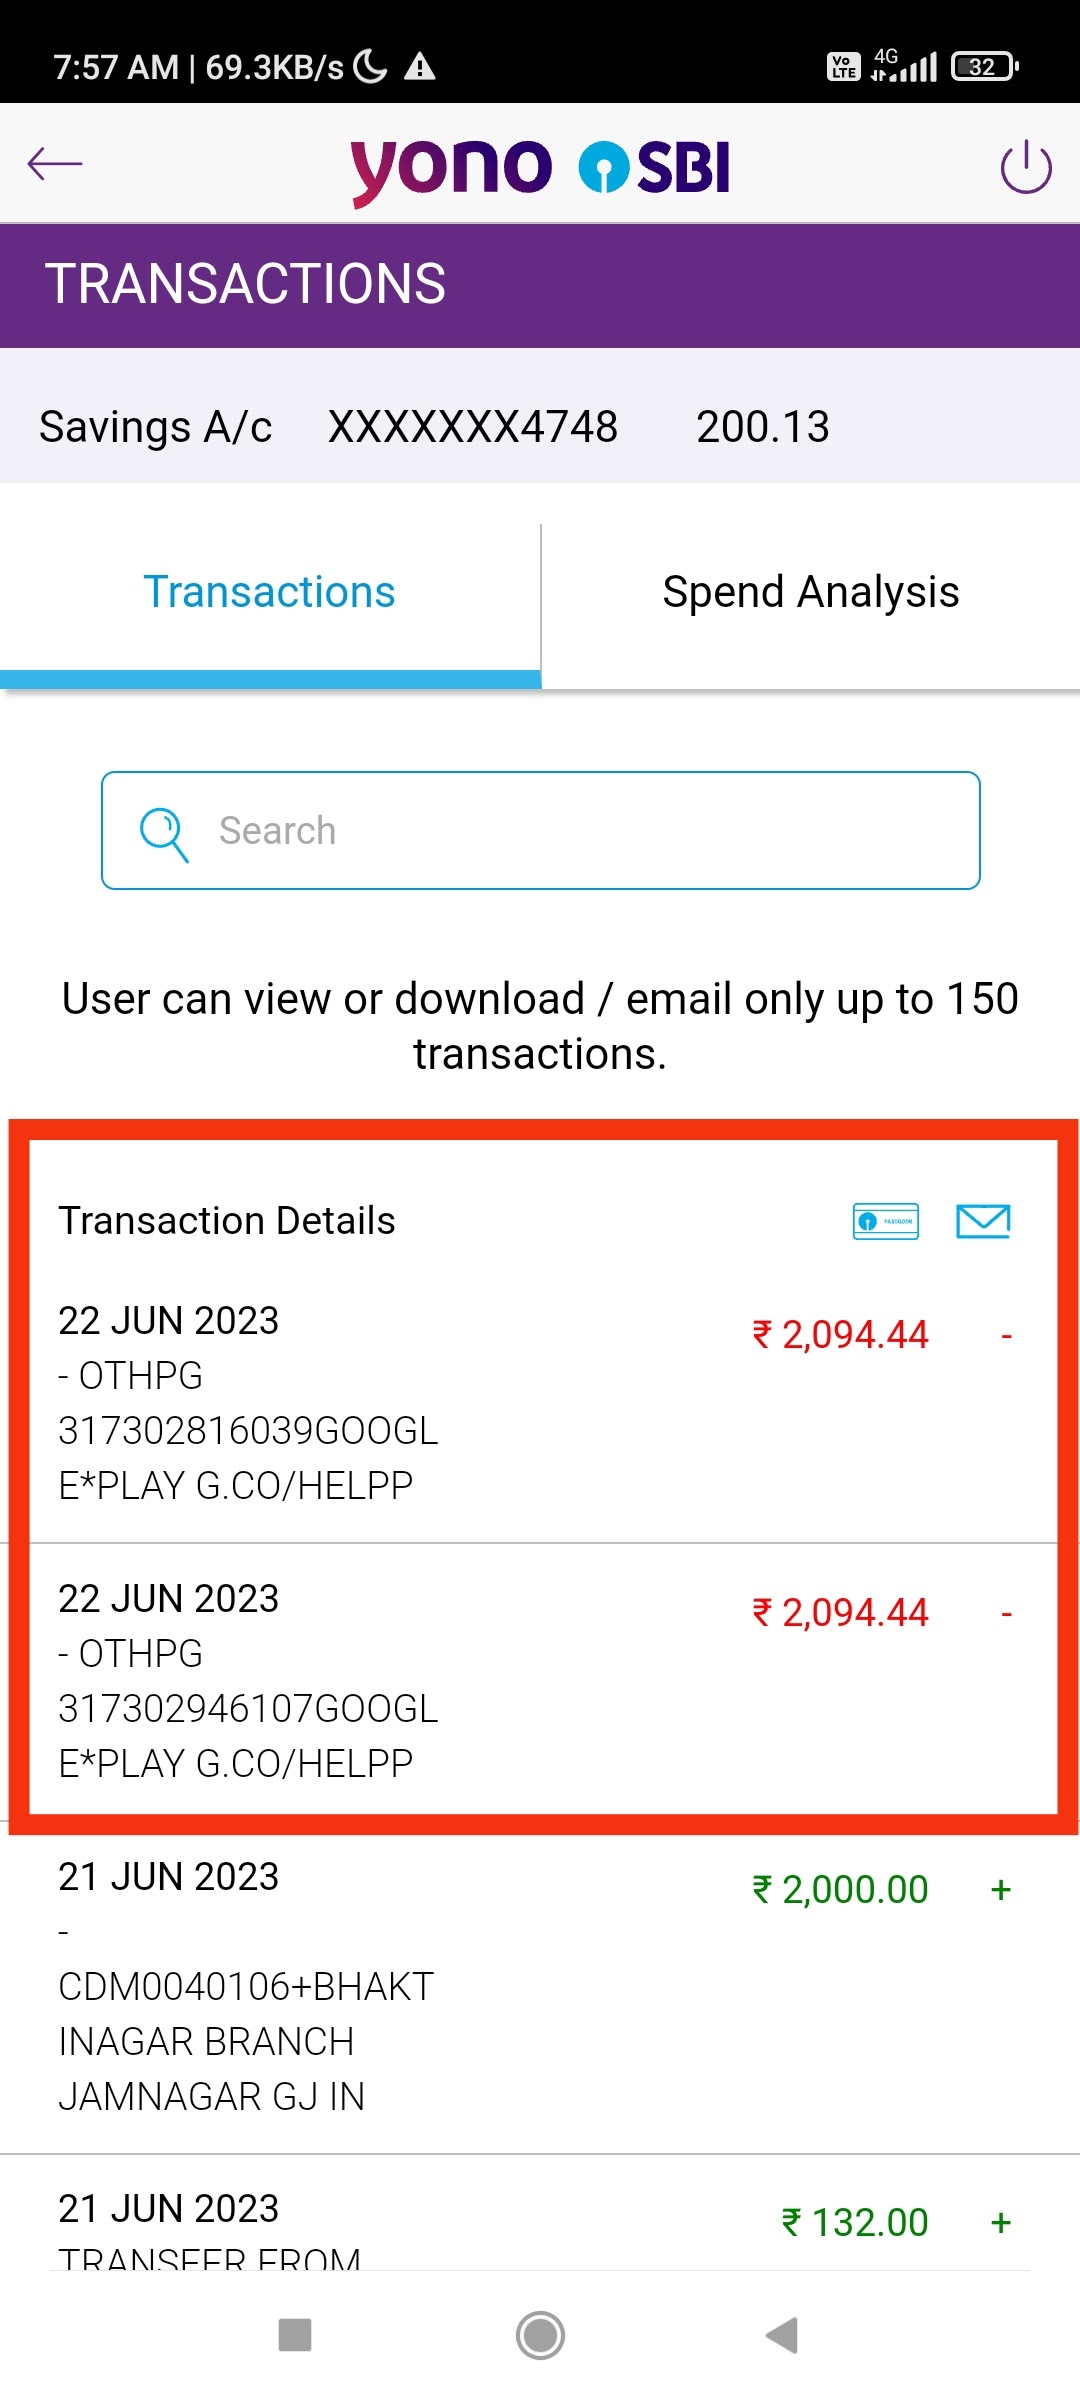 Buy Gmail Accounts in Bulk at Rs 15/day in Delhi | ID: 